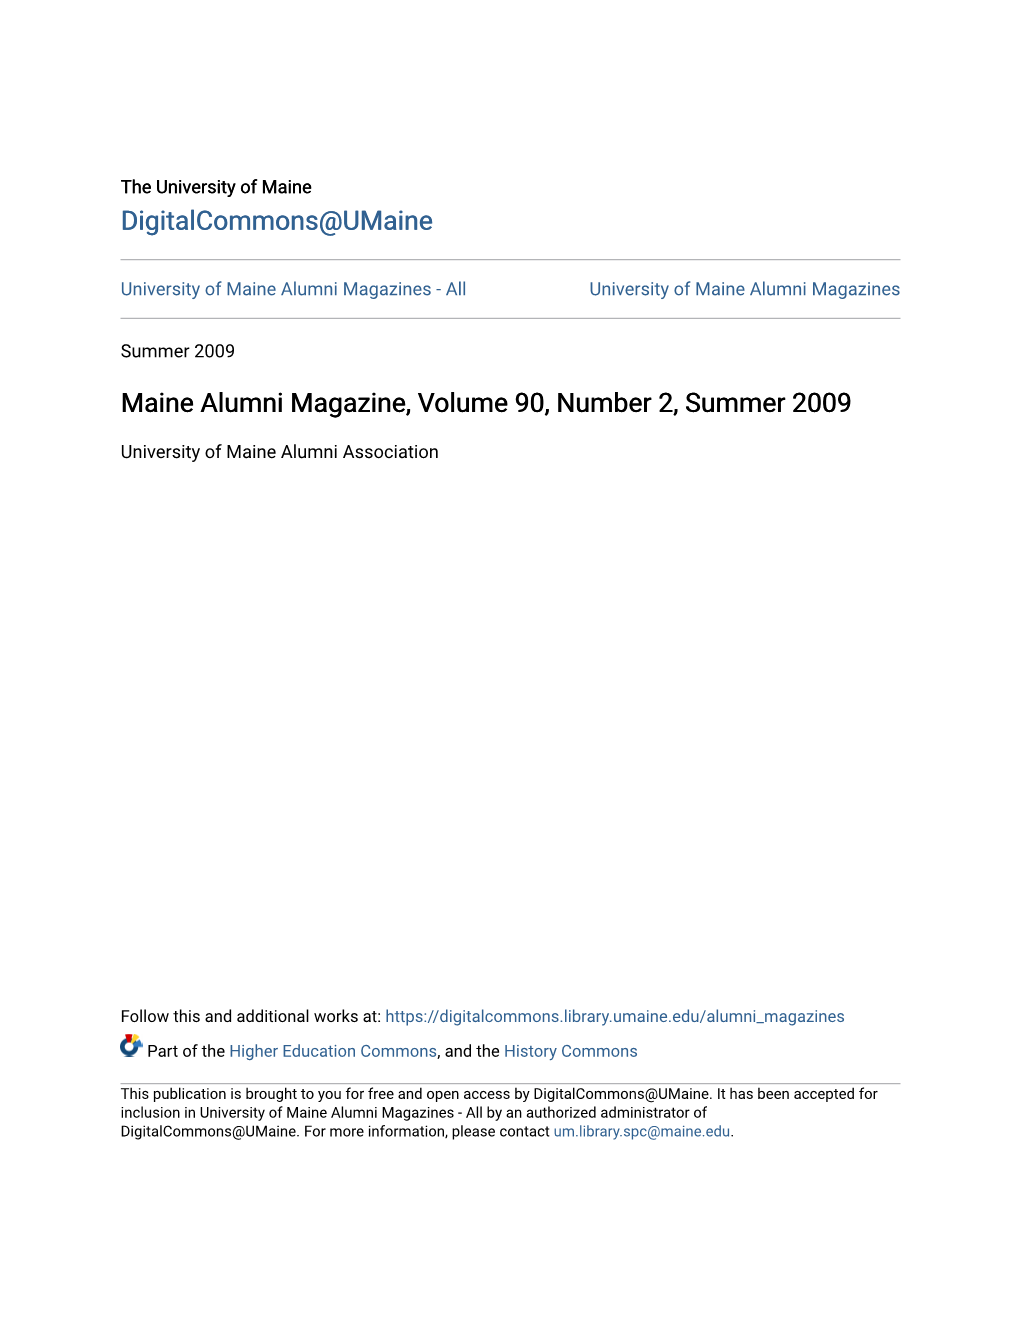 Maine Alumni Magazine, Volume 90, Number 2, Summer 2009